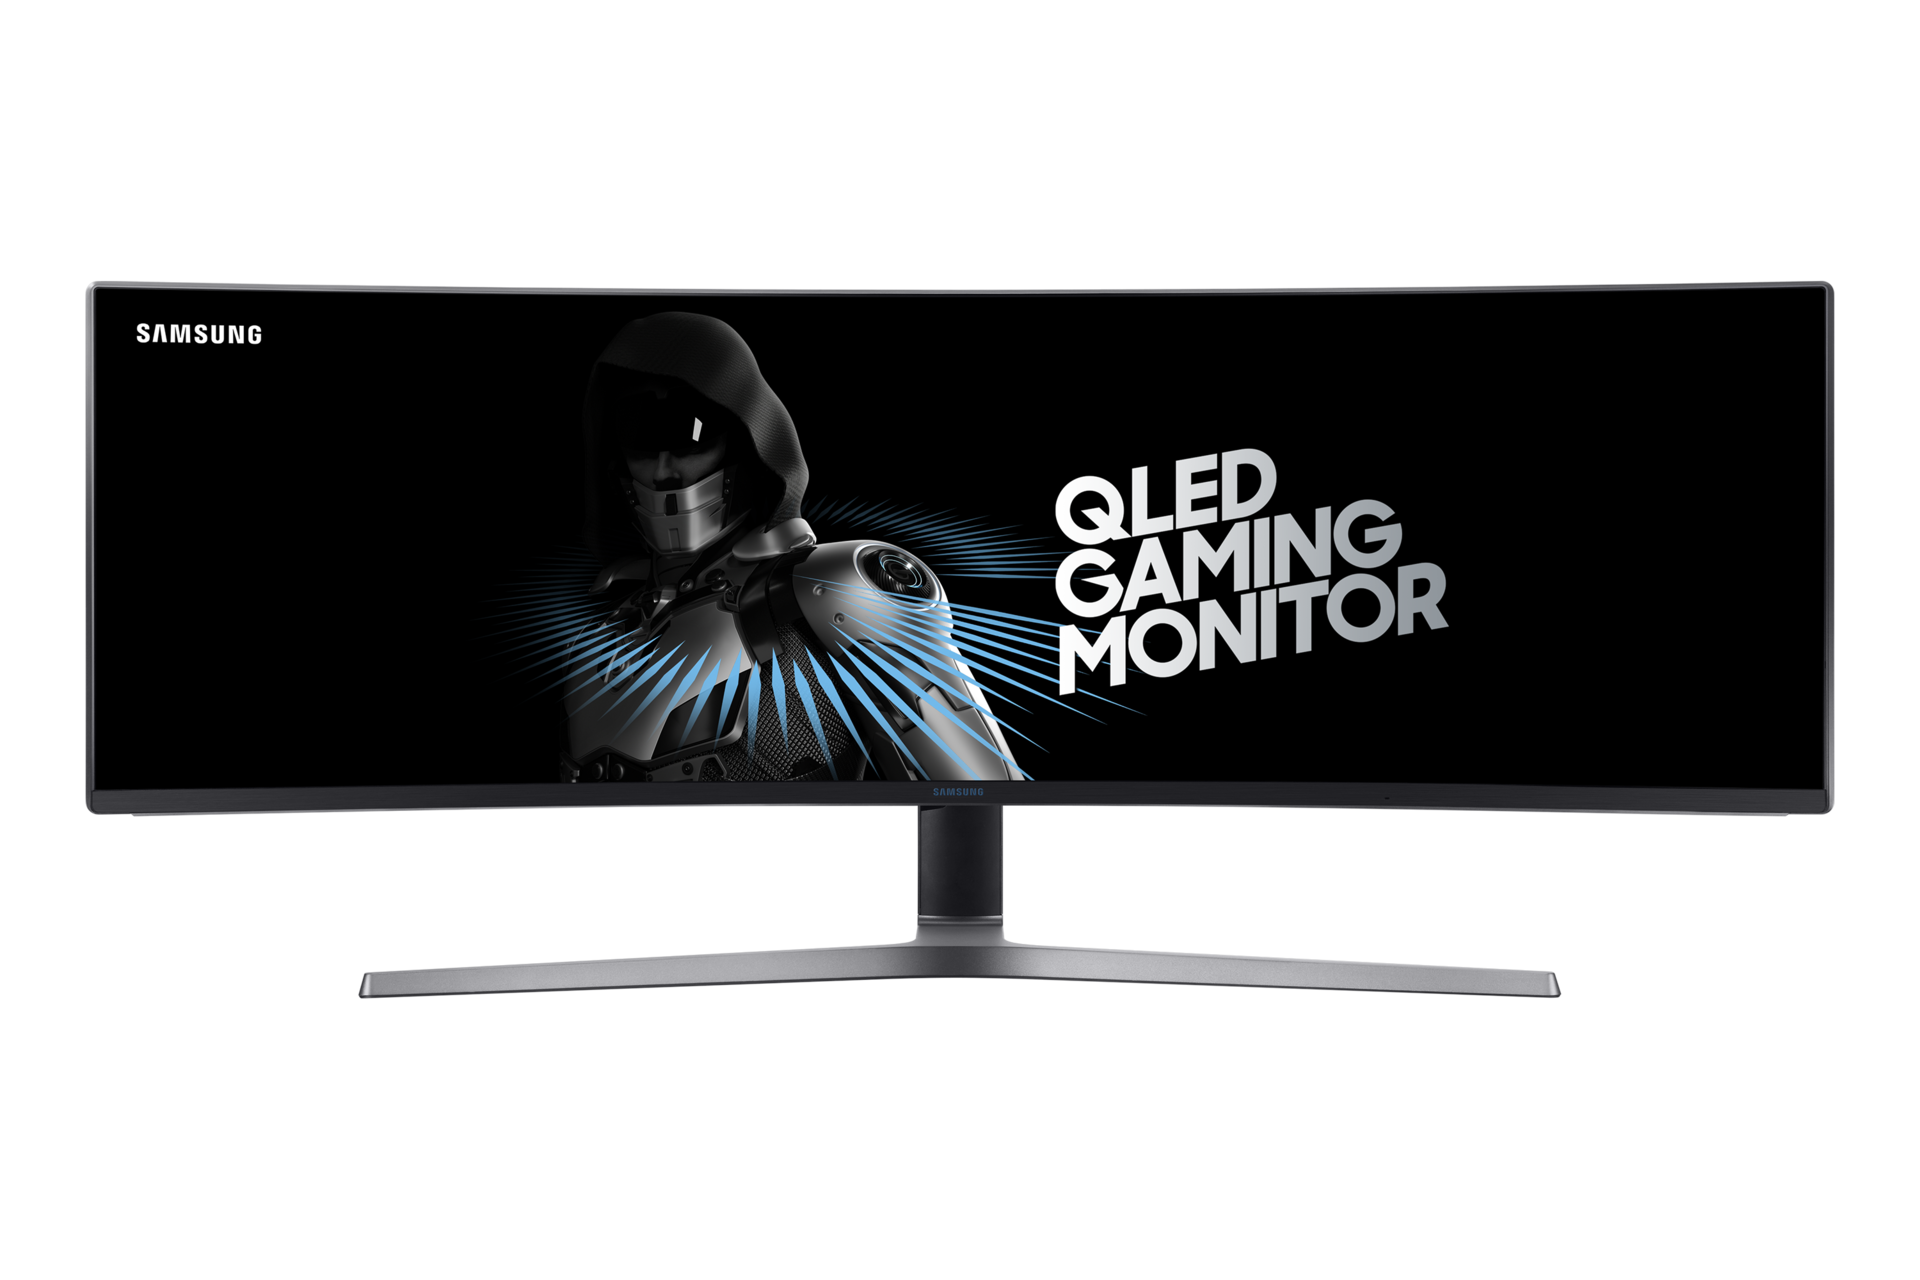 qled gaming monitor 49 chg90 ราคา black